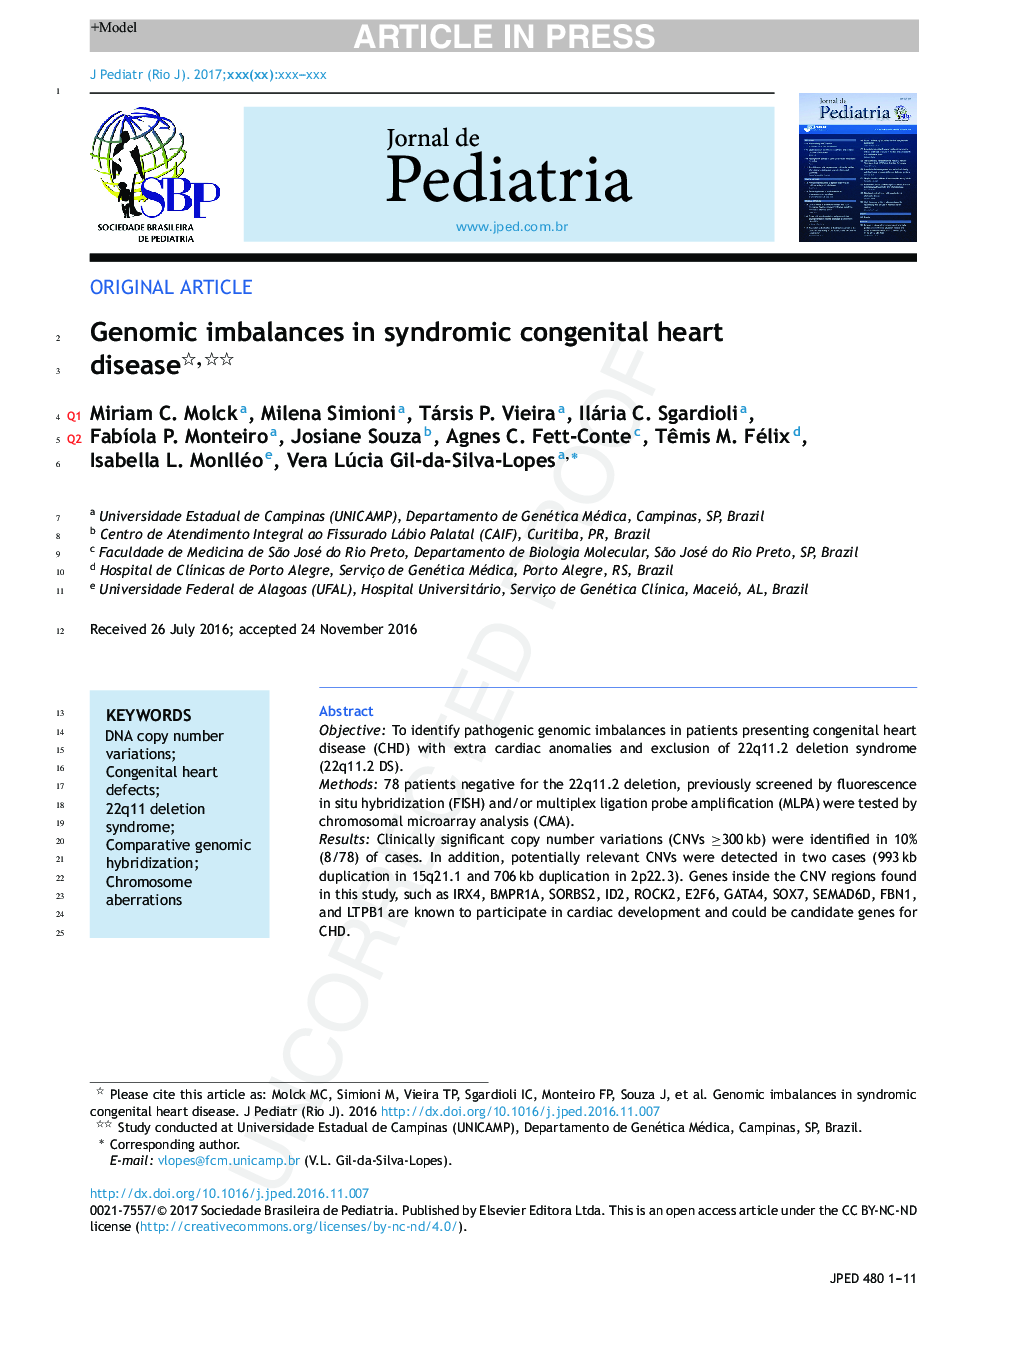 Genomic imbalances in syndromic congenital heart disease